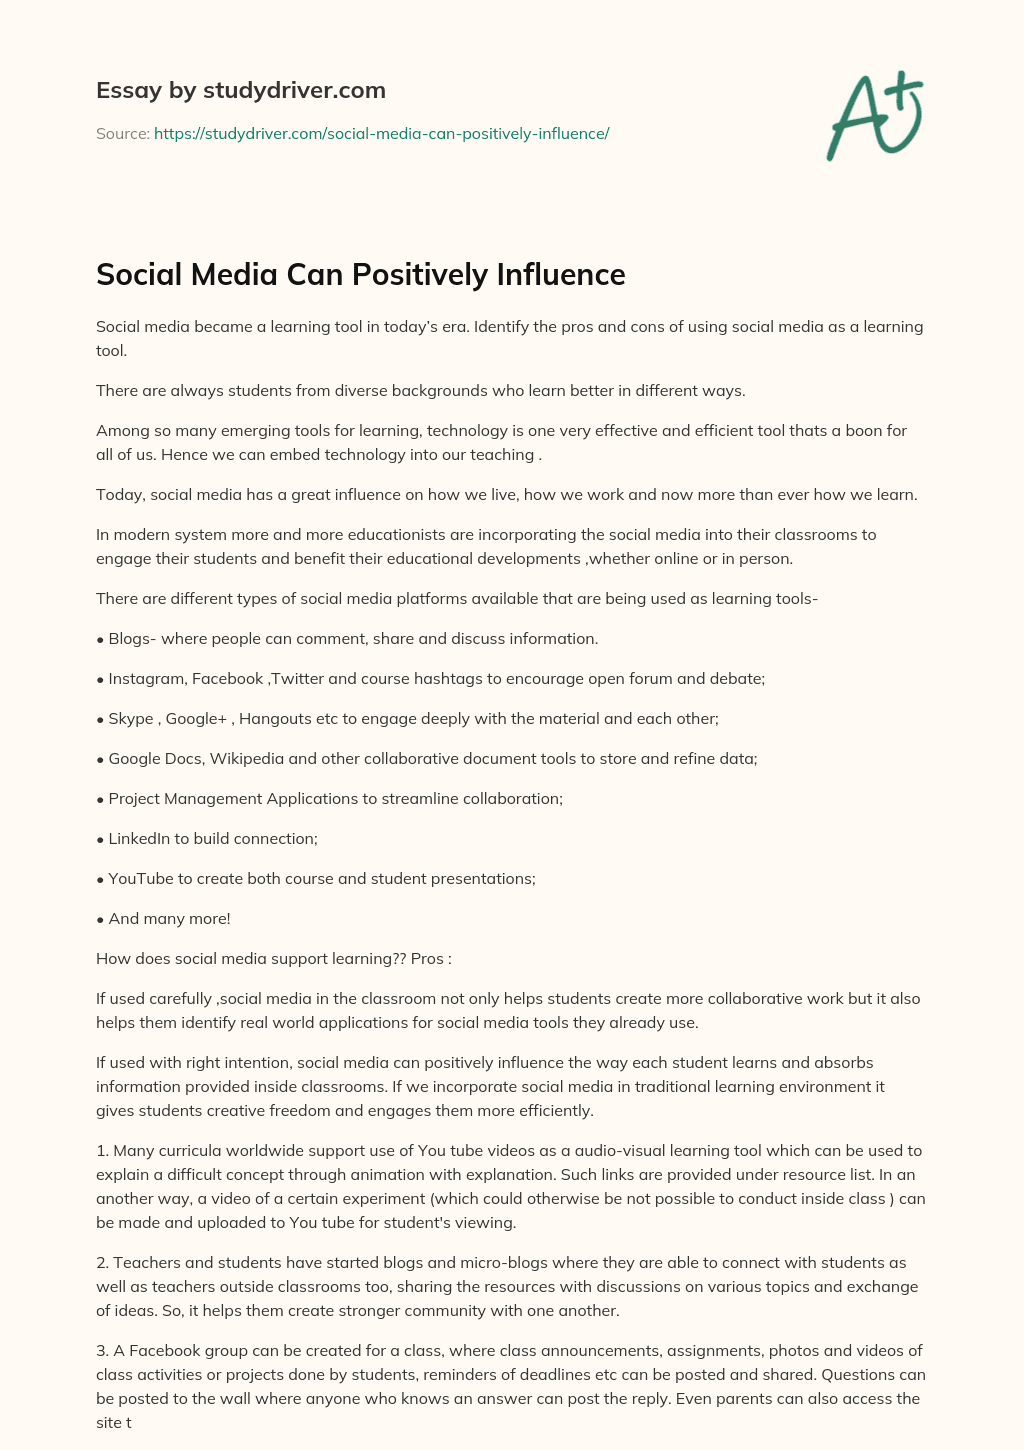 Social Media Can Positively Influence essay